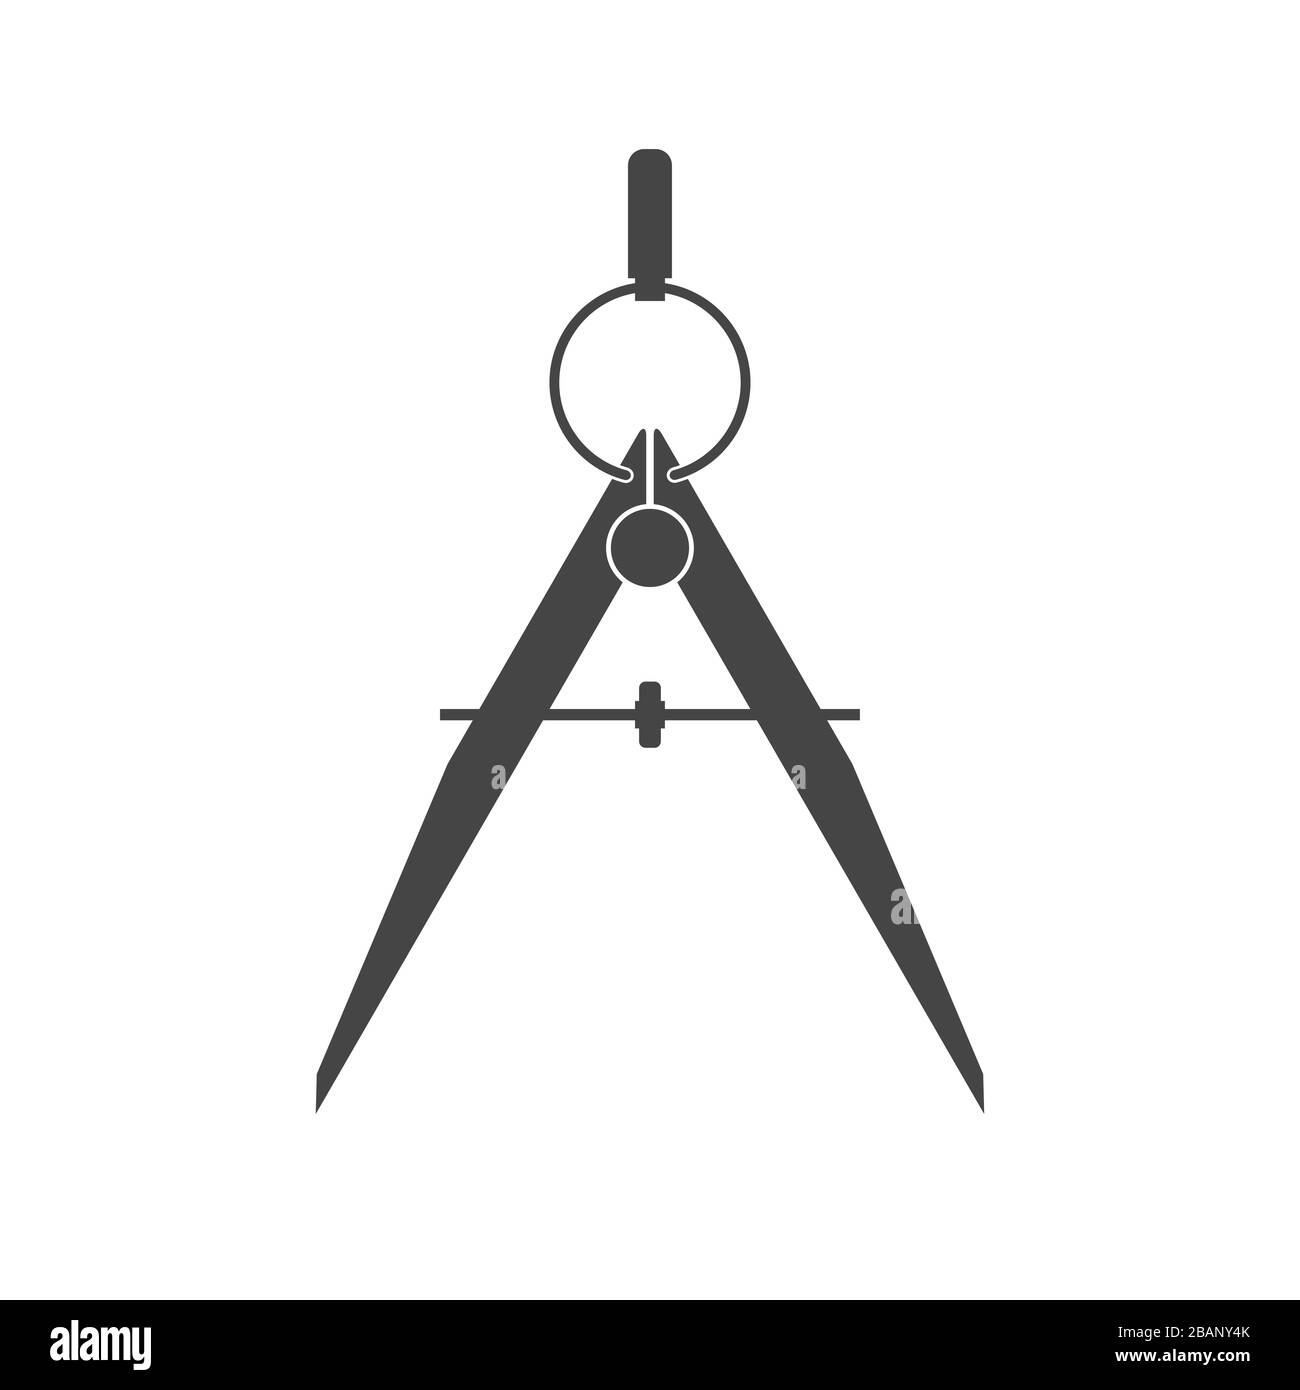 Drawing compass silhouette icon. illustration. Architectural bureau, cartography, masonic lodge symbol. Stock Photo